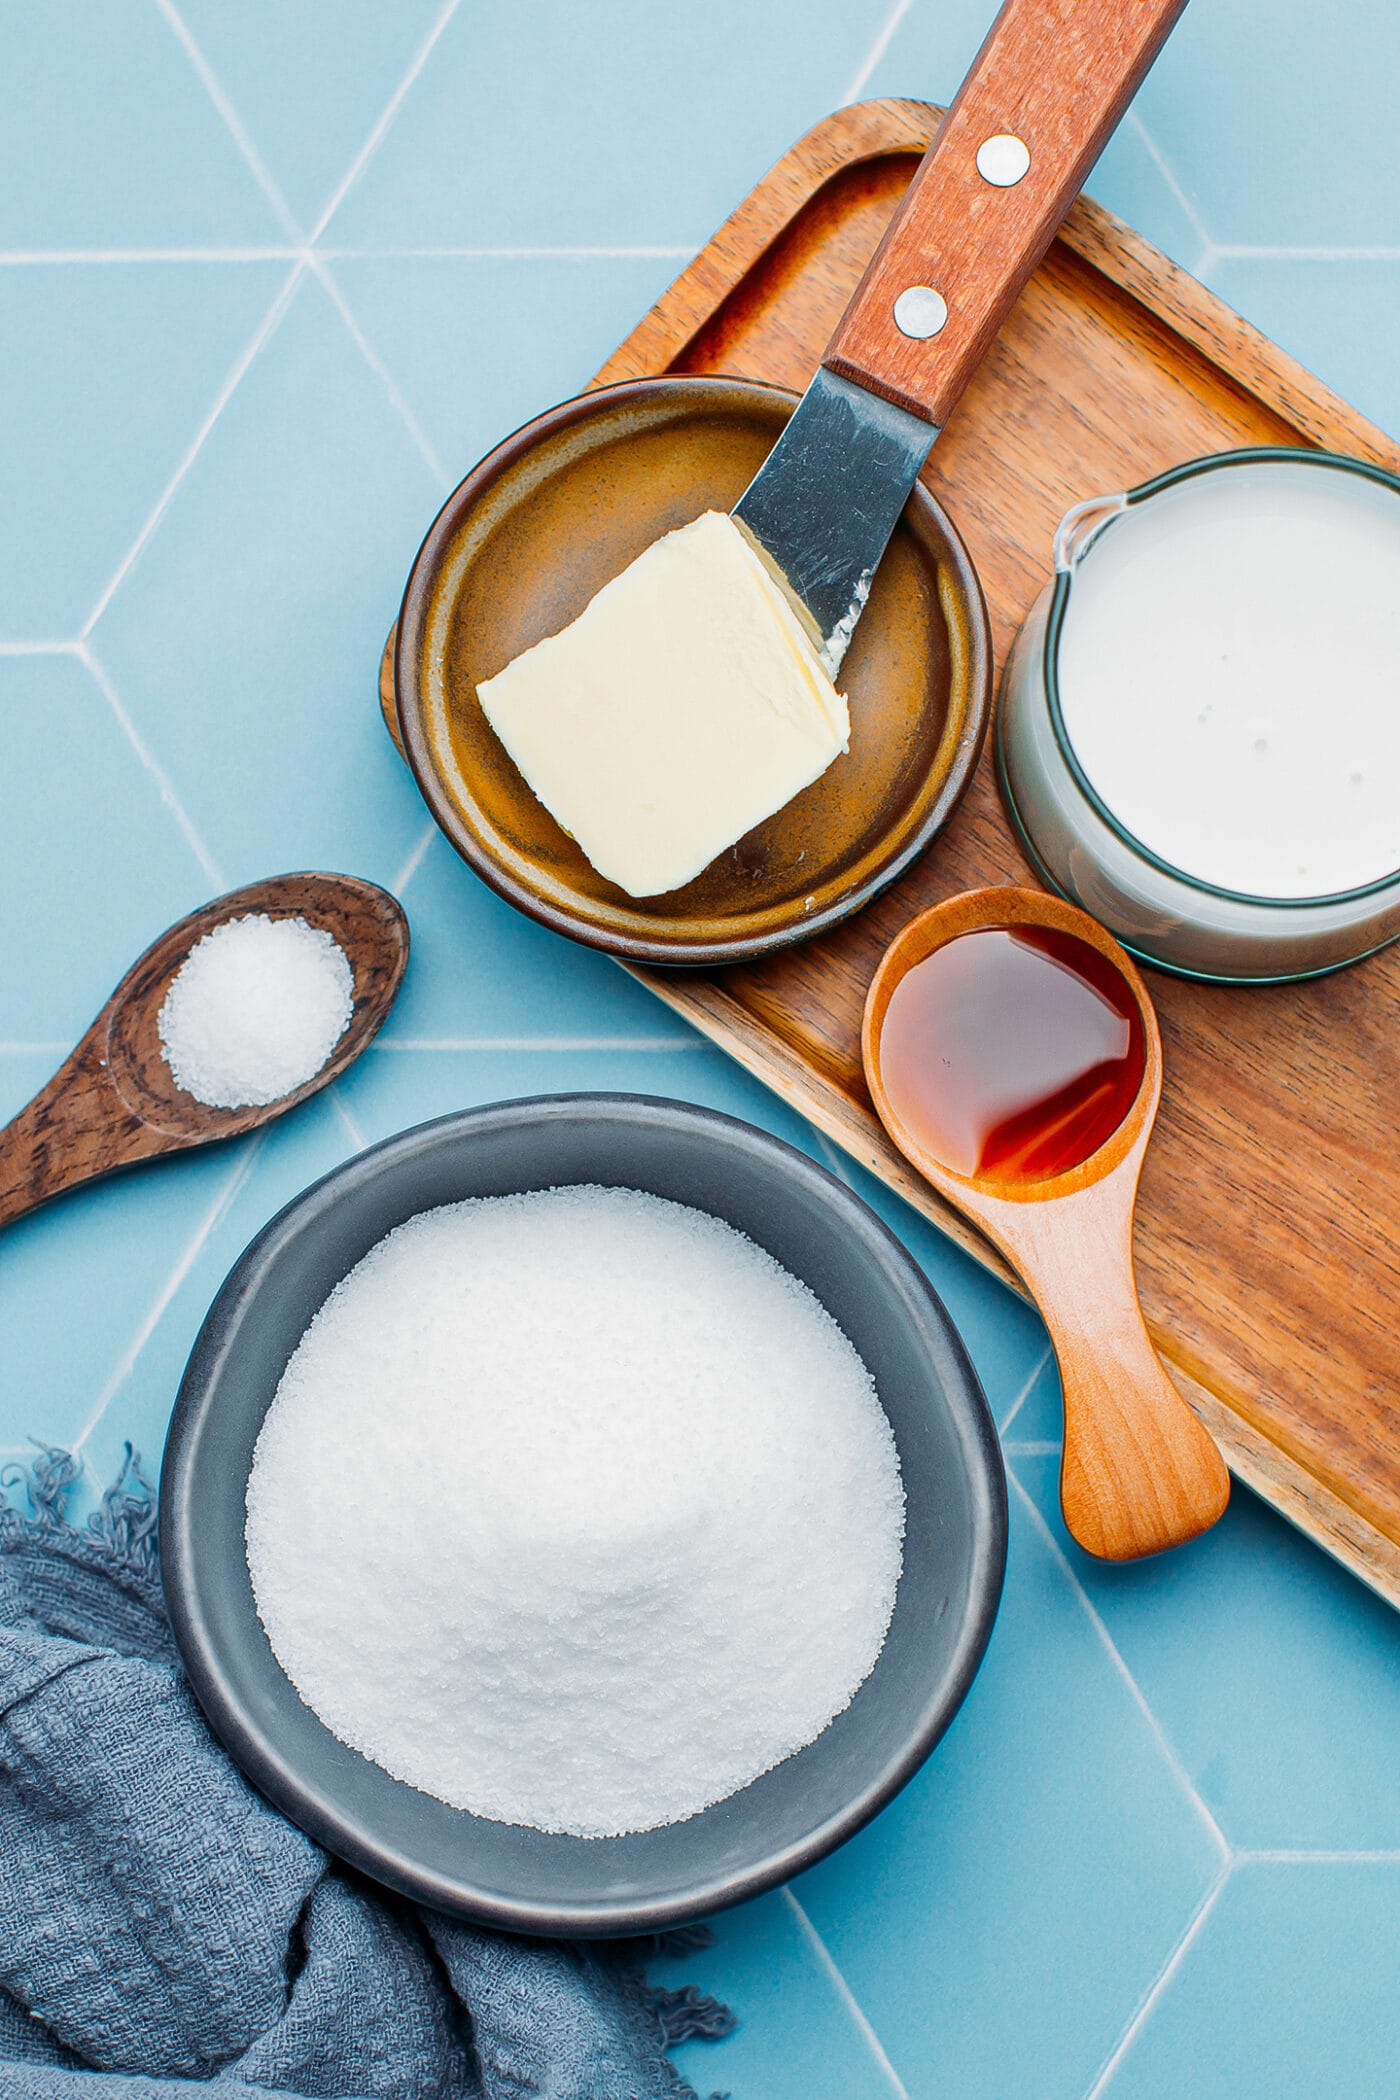 Ingredients like sugar, butter, coconut milk, salt, and vanilla extract.